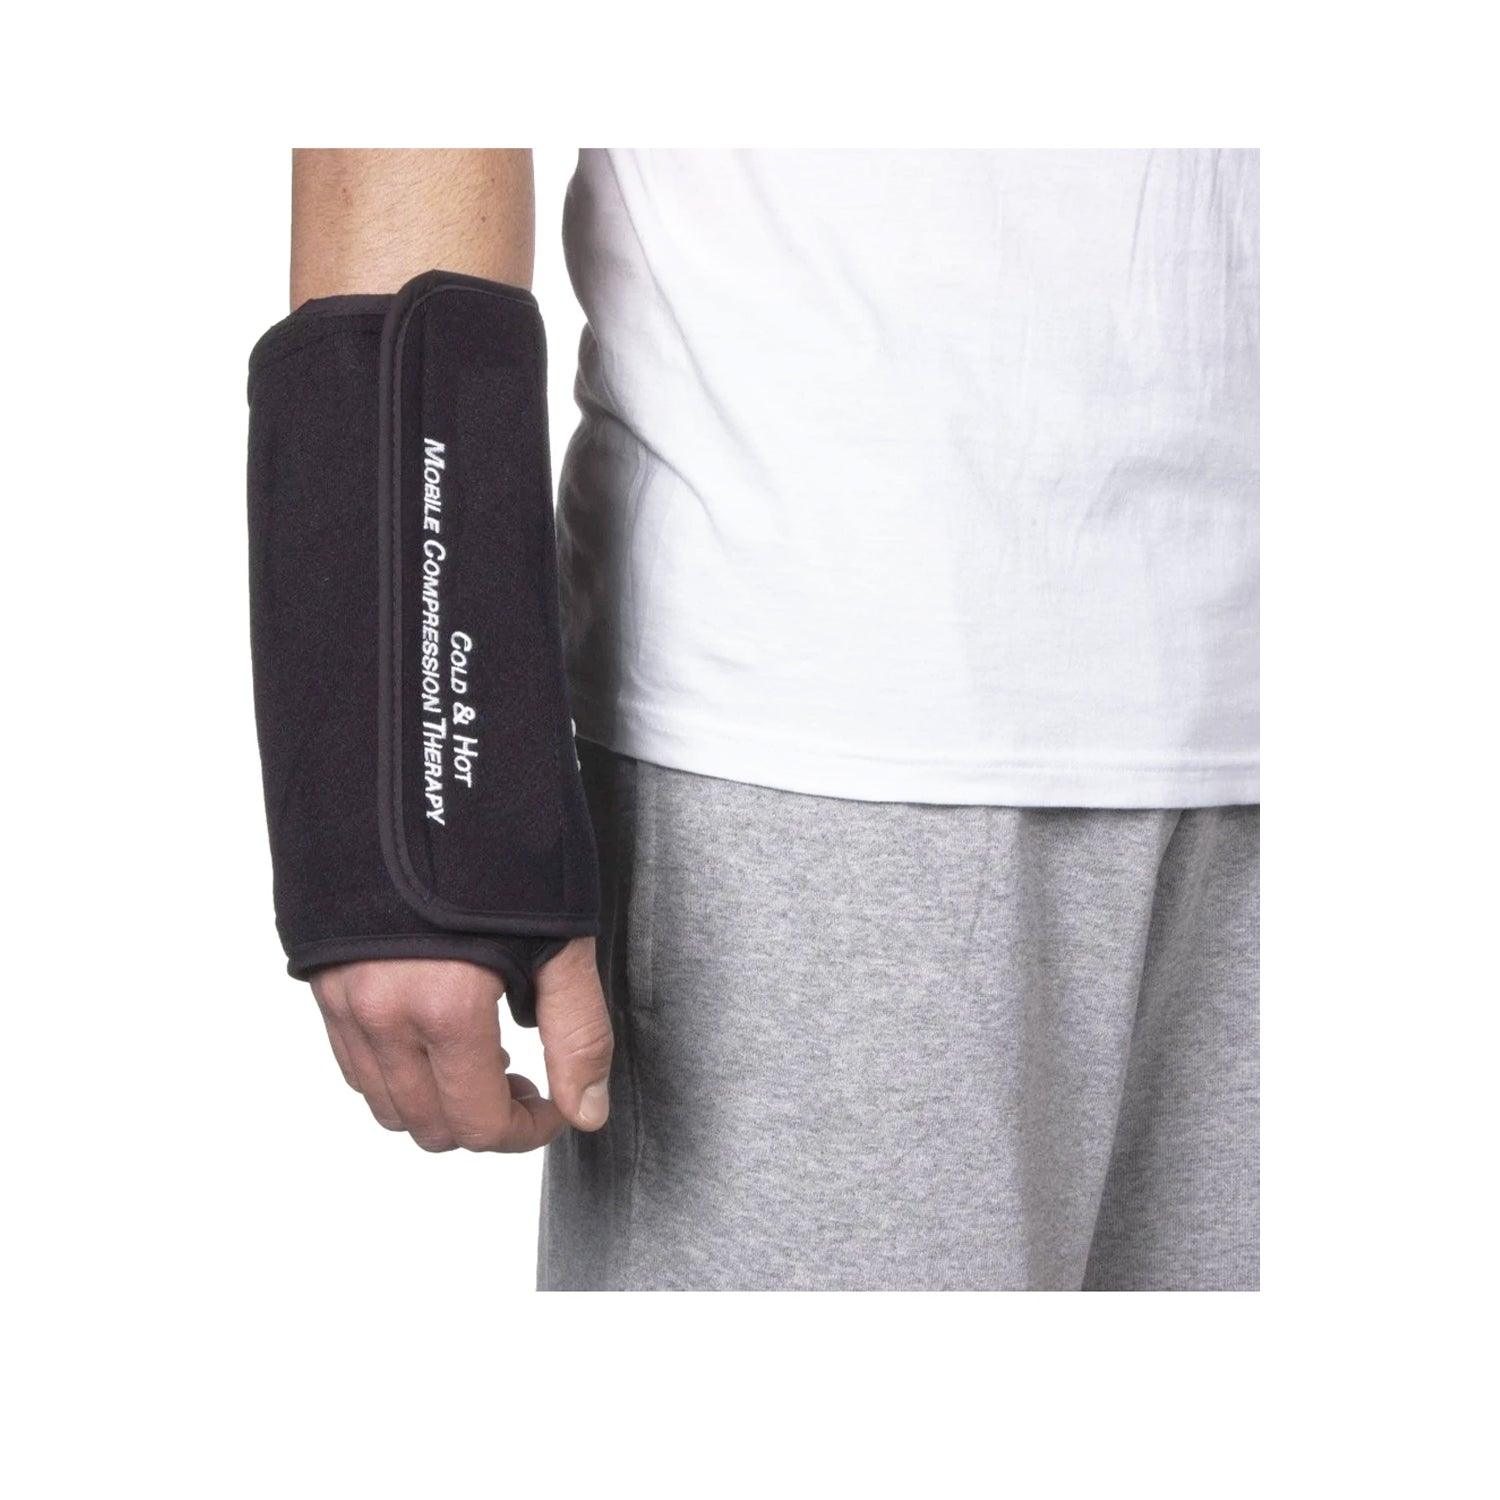 Cold & Compression Wrist Support | NatraCure